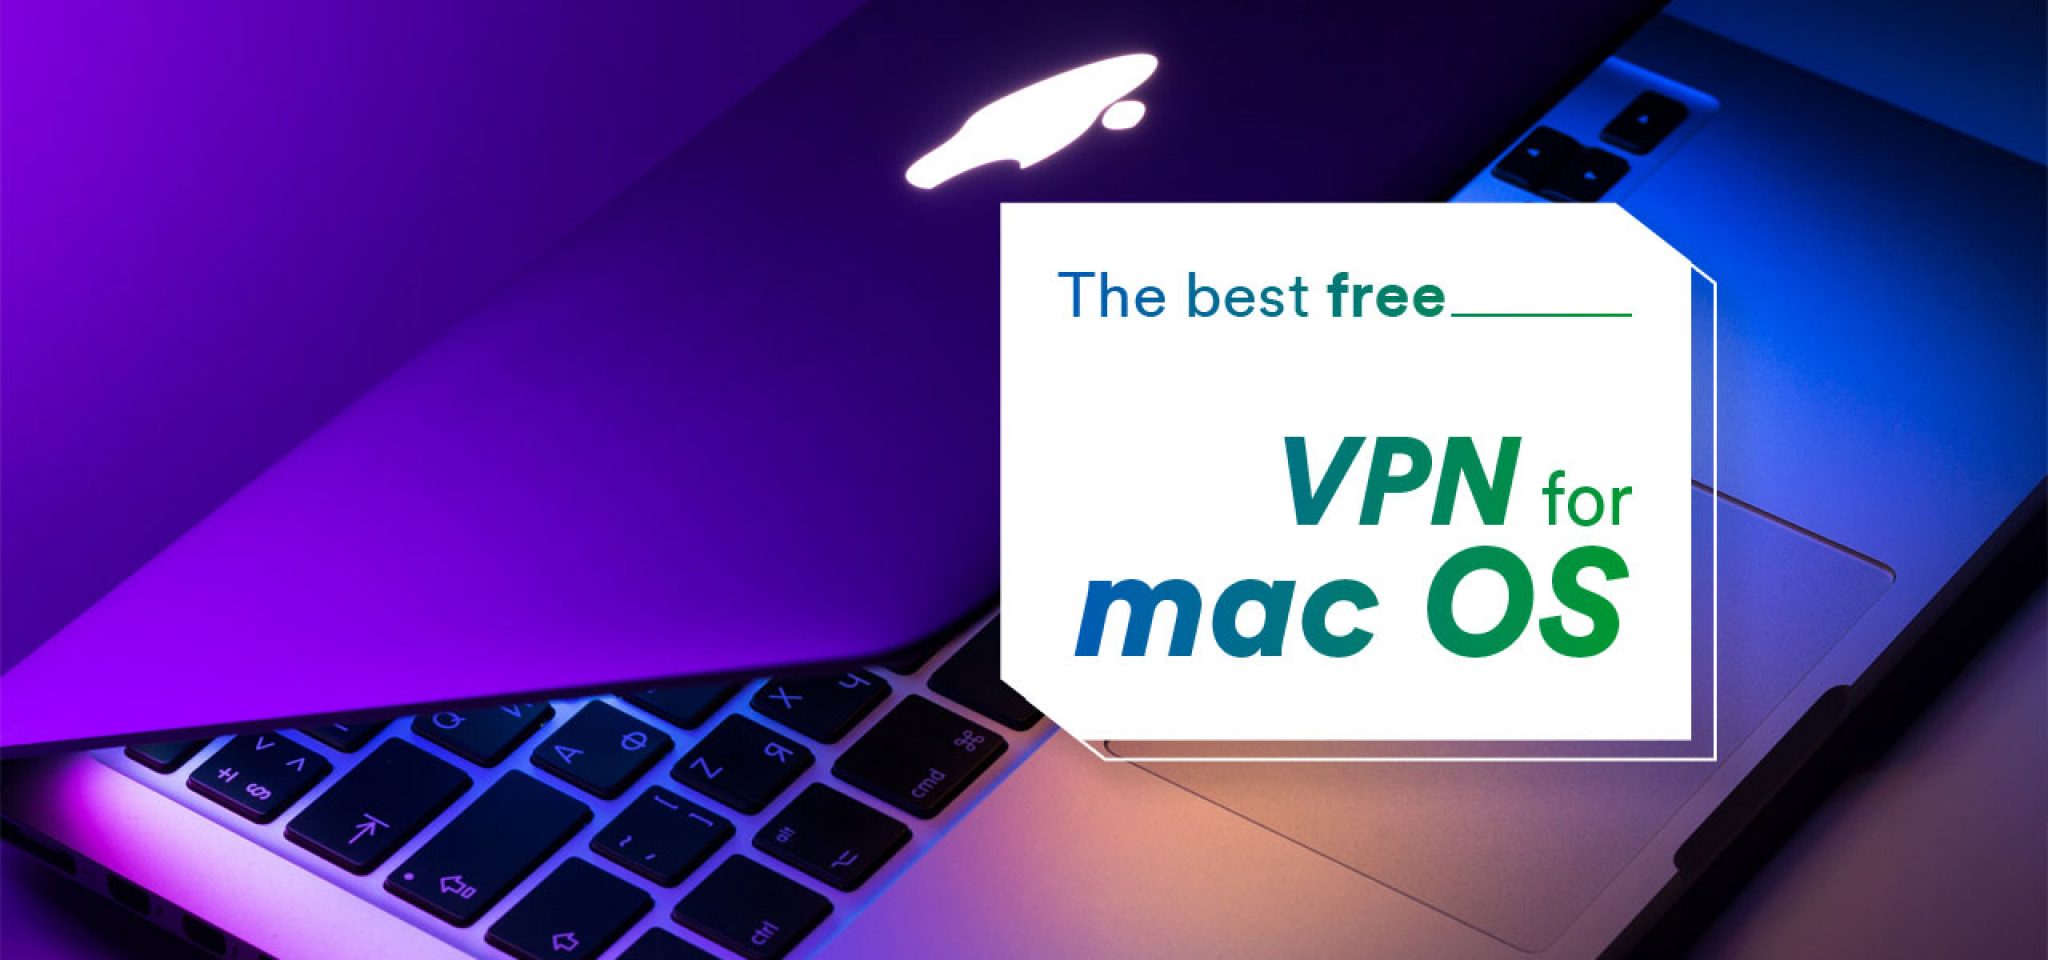 free vpn mac os x 10.4